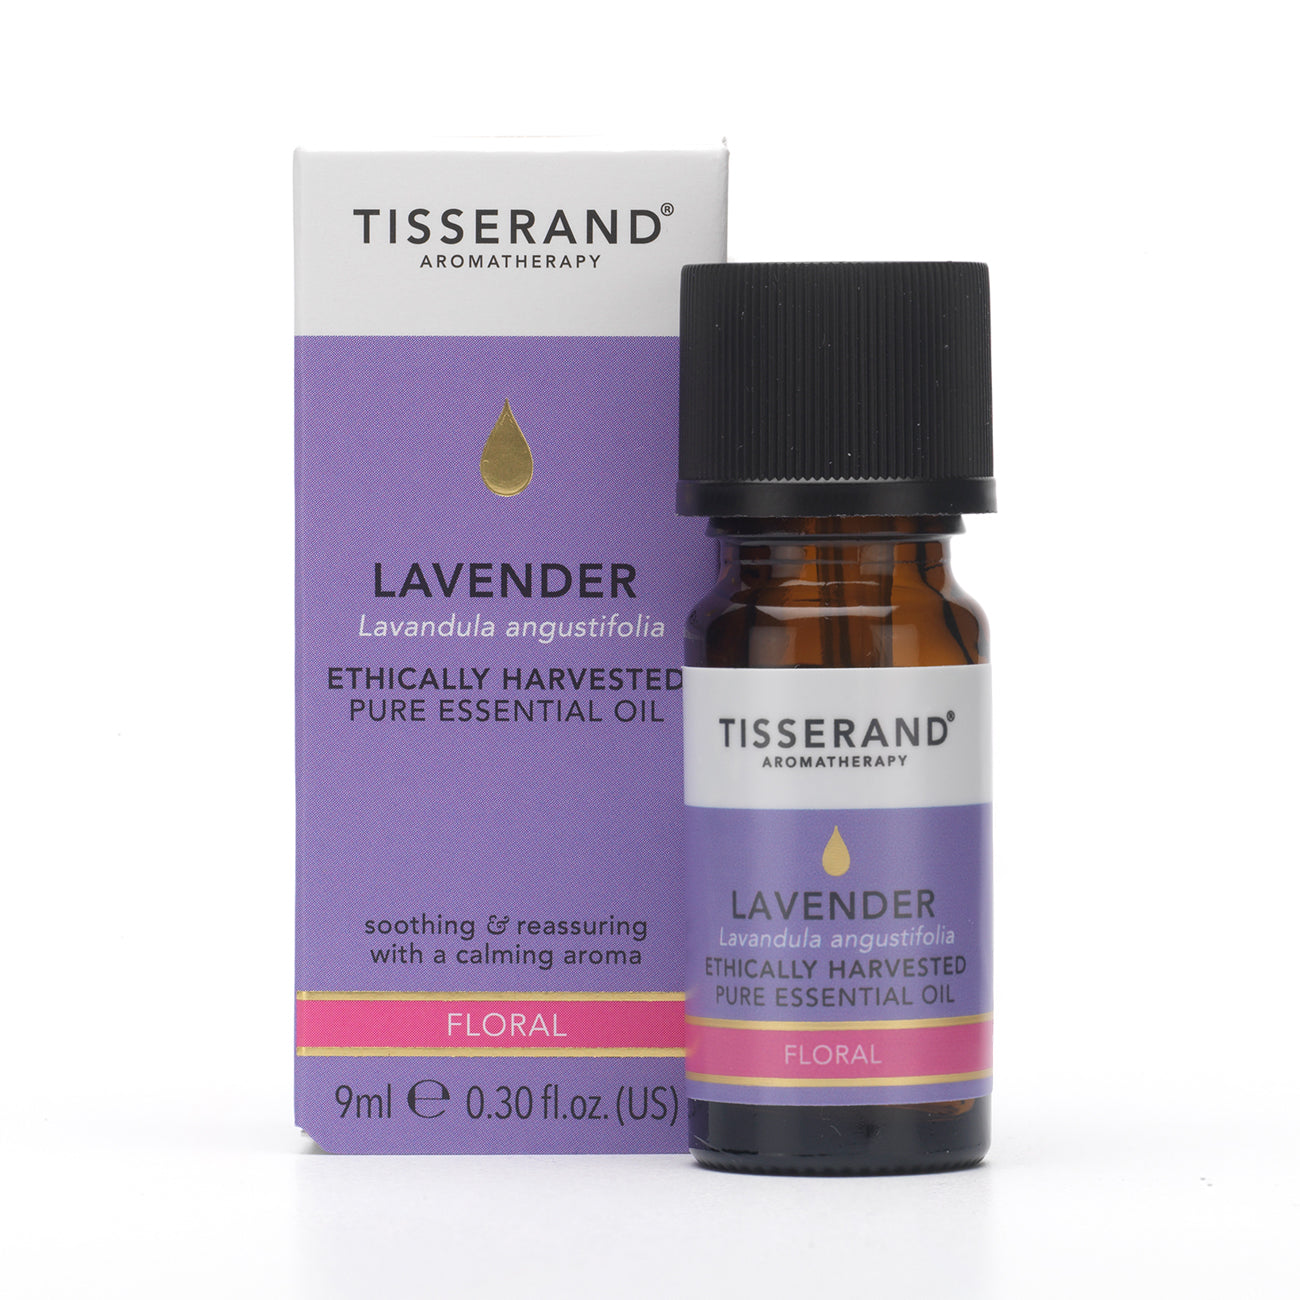 Tisserand Aromatherapy Lavender Organic Pure Essential Oil Grace Beauty